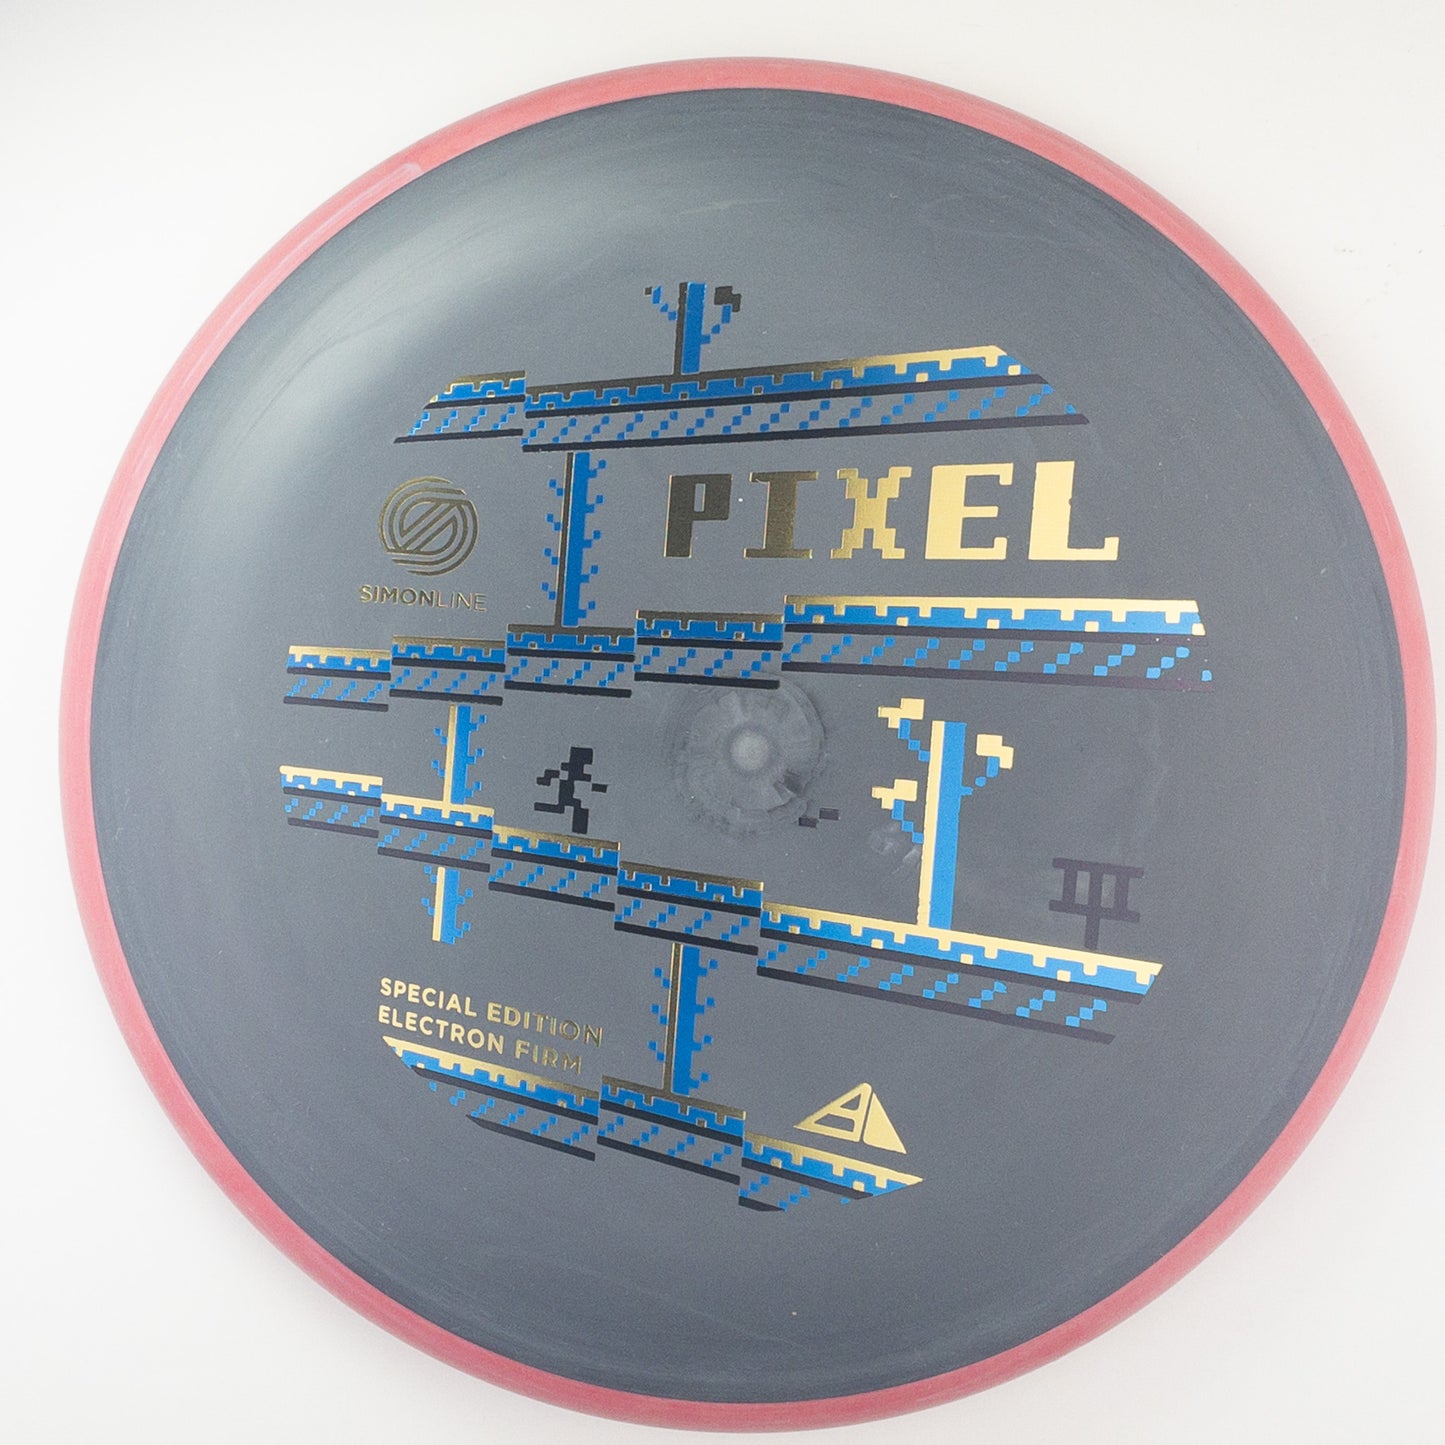 Axiom Electron Firm Pixel - Simon Line Special Edition